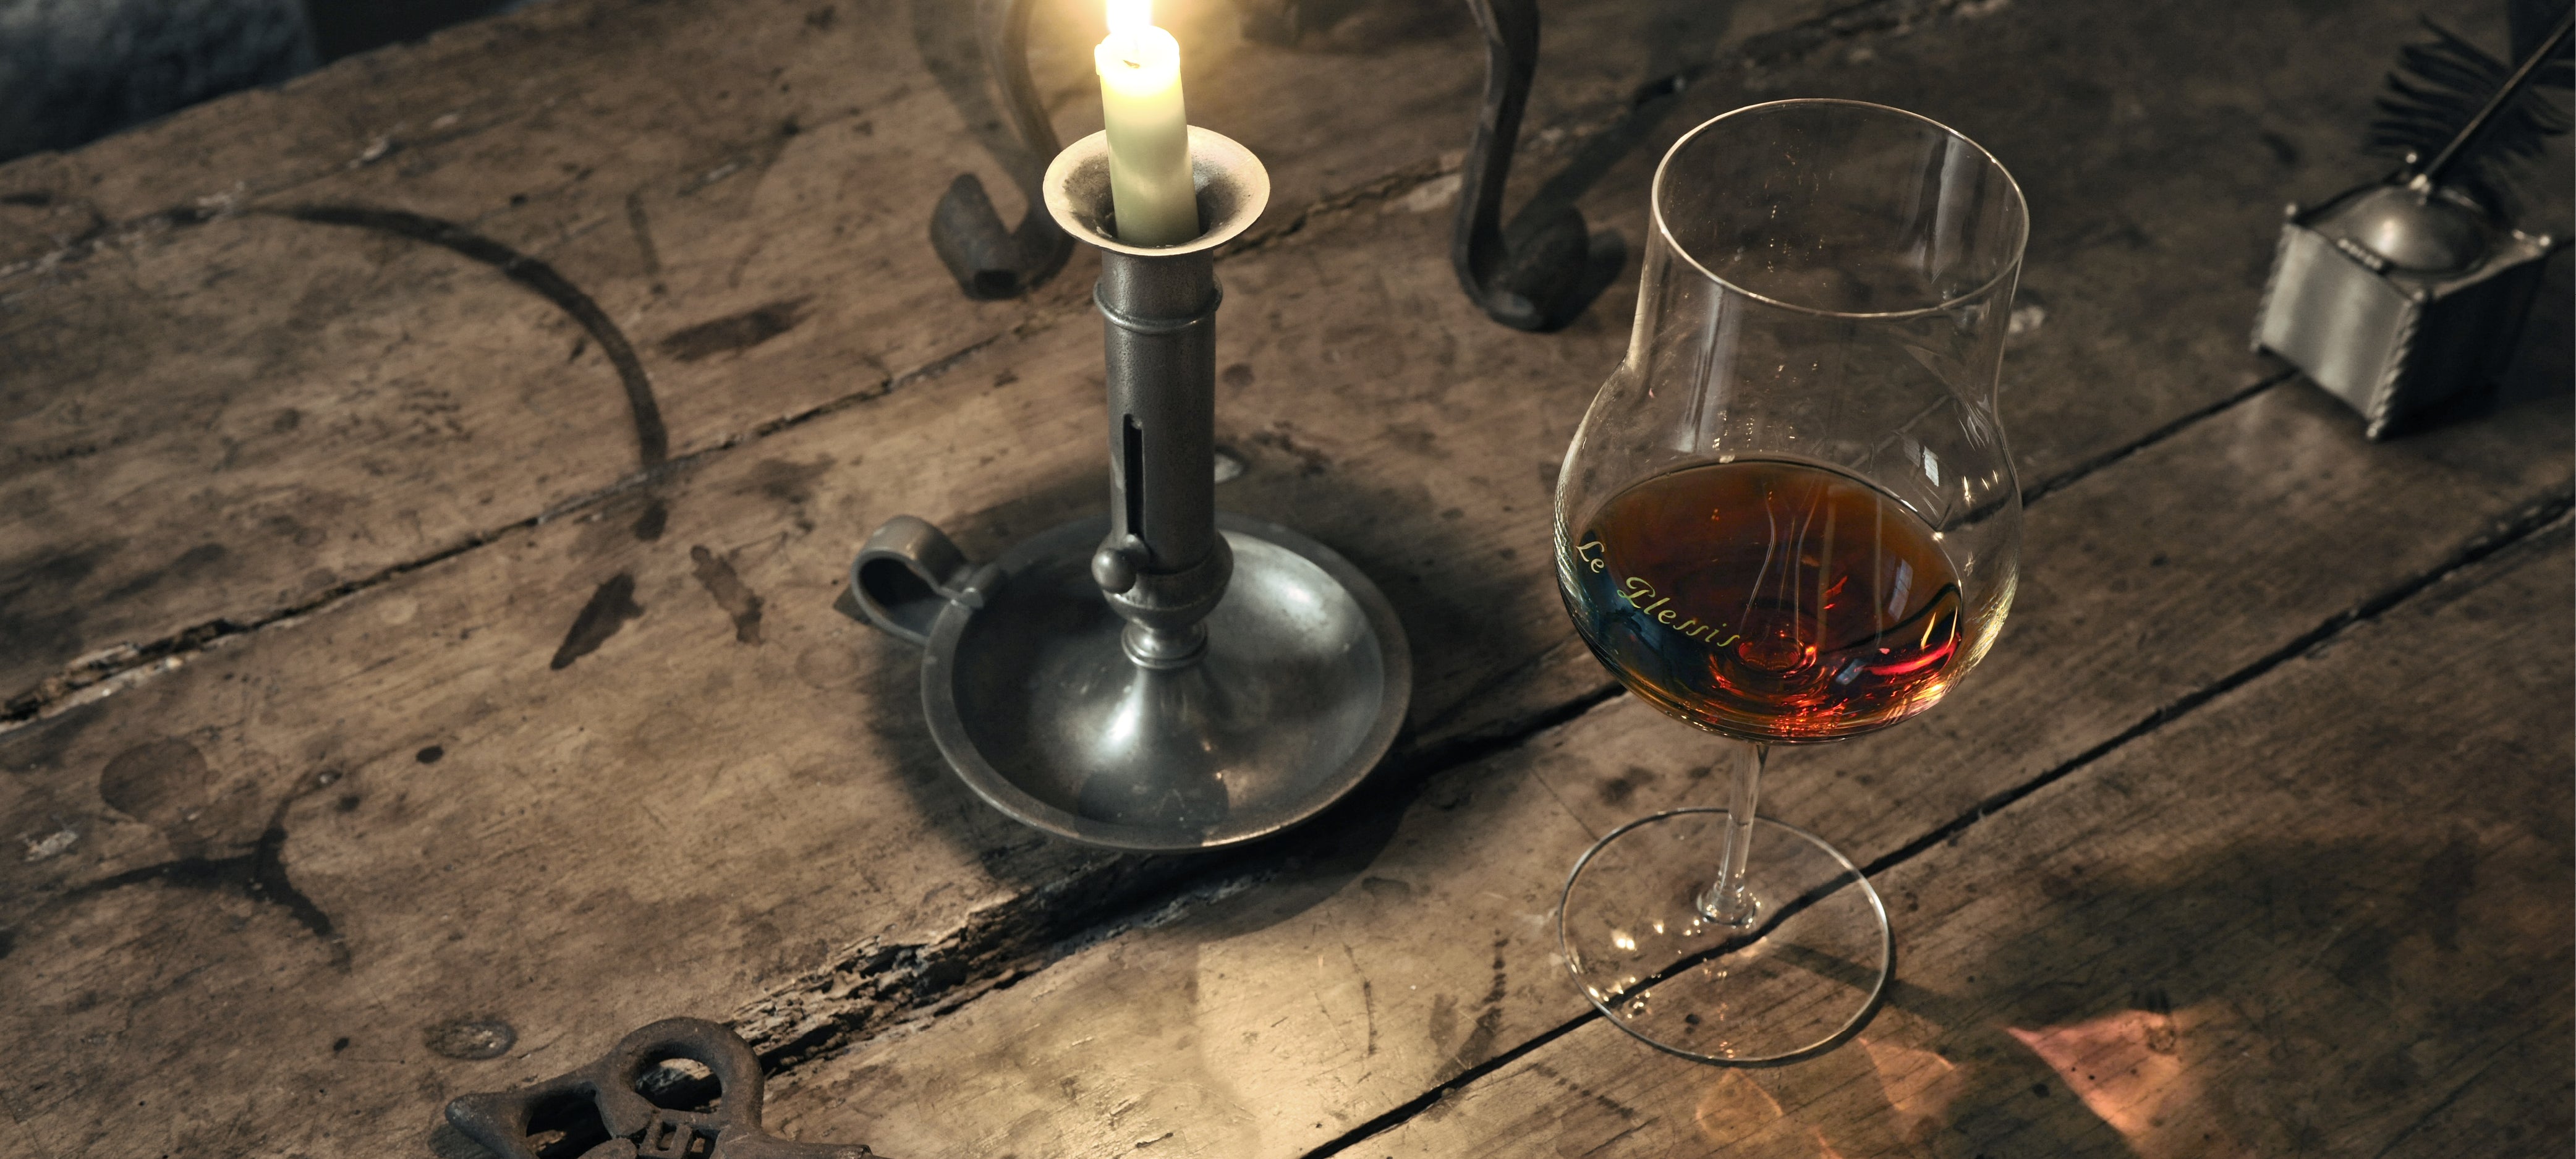 Is Cognac a Brandy? And is Brandy a Cognac? | CAMUS COGNAC